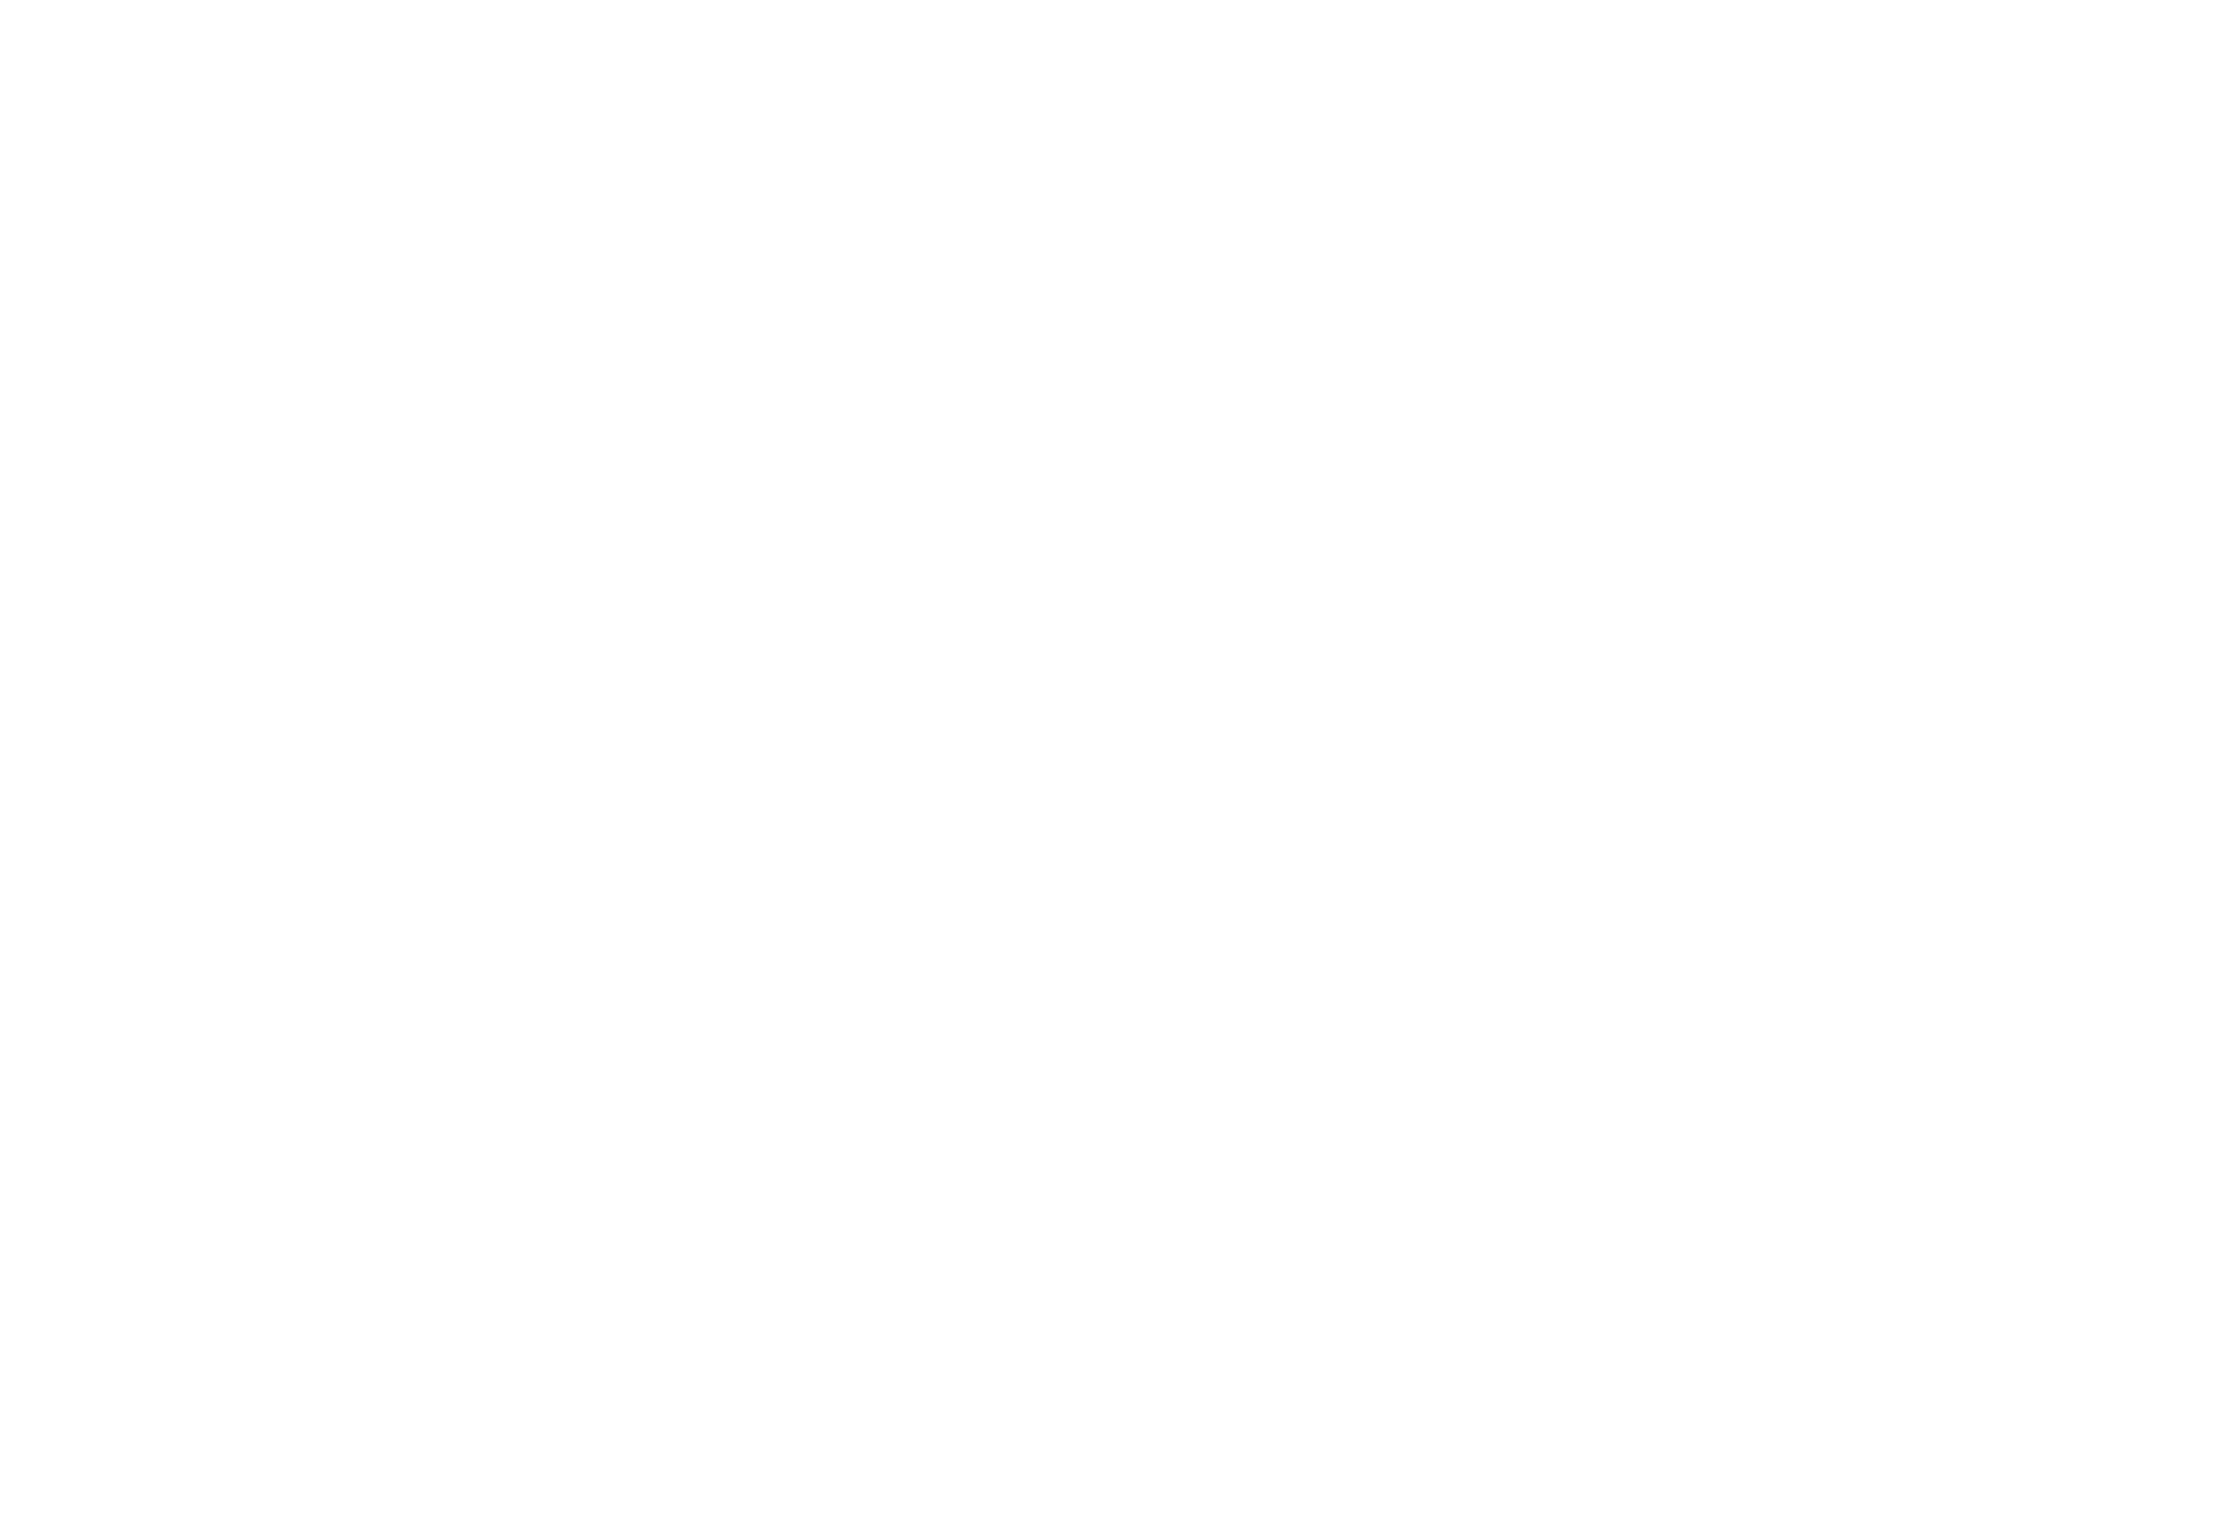 DAEDO, the Official Sponsor for World Taekwondo Championships 2022 in Mexico